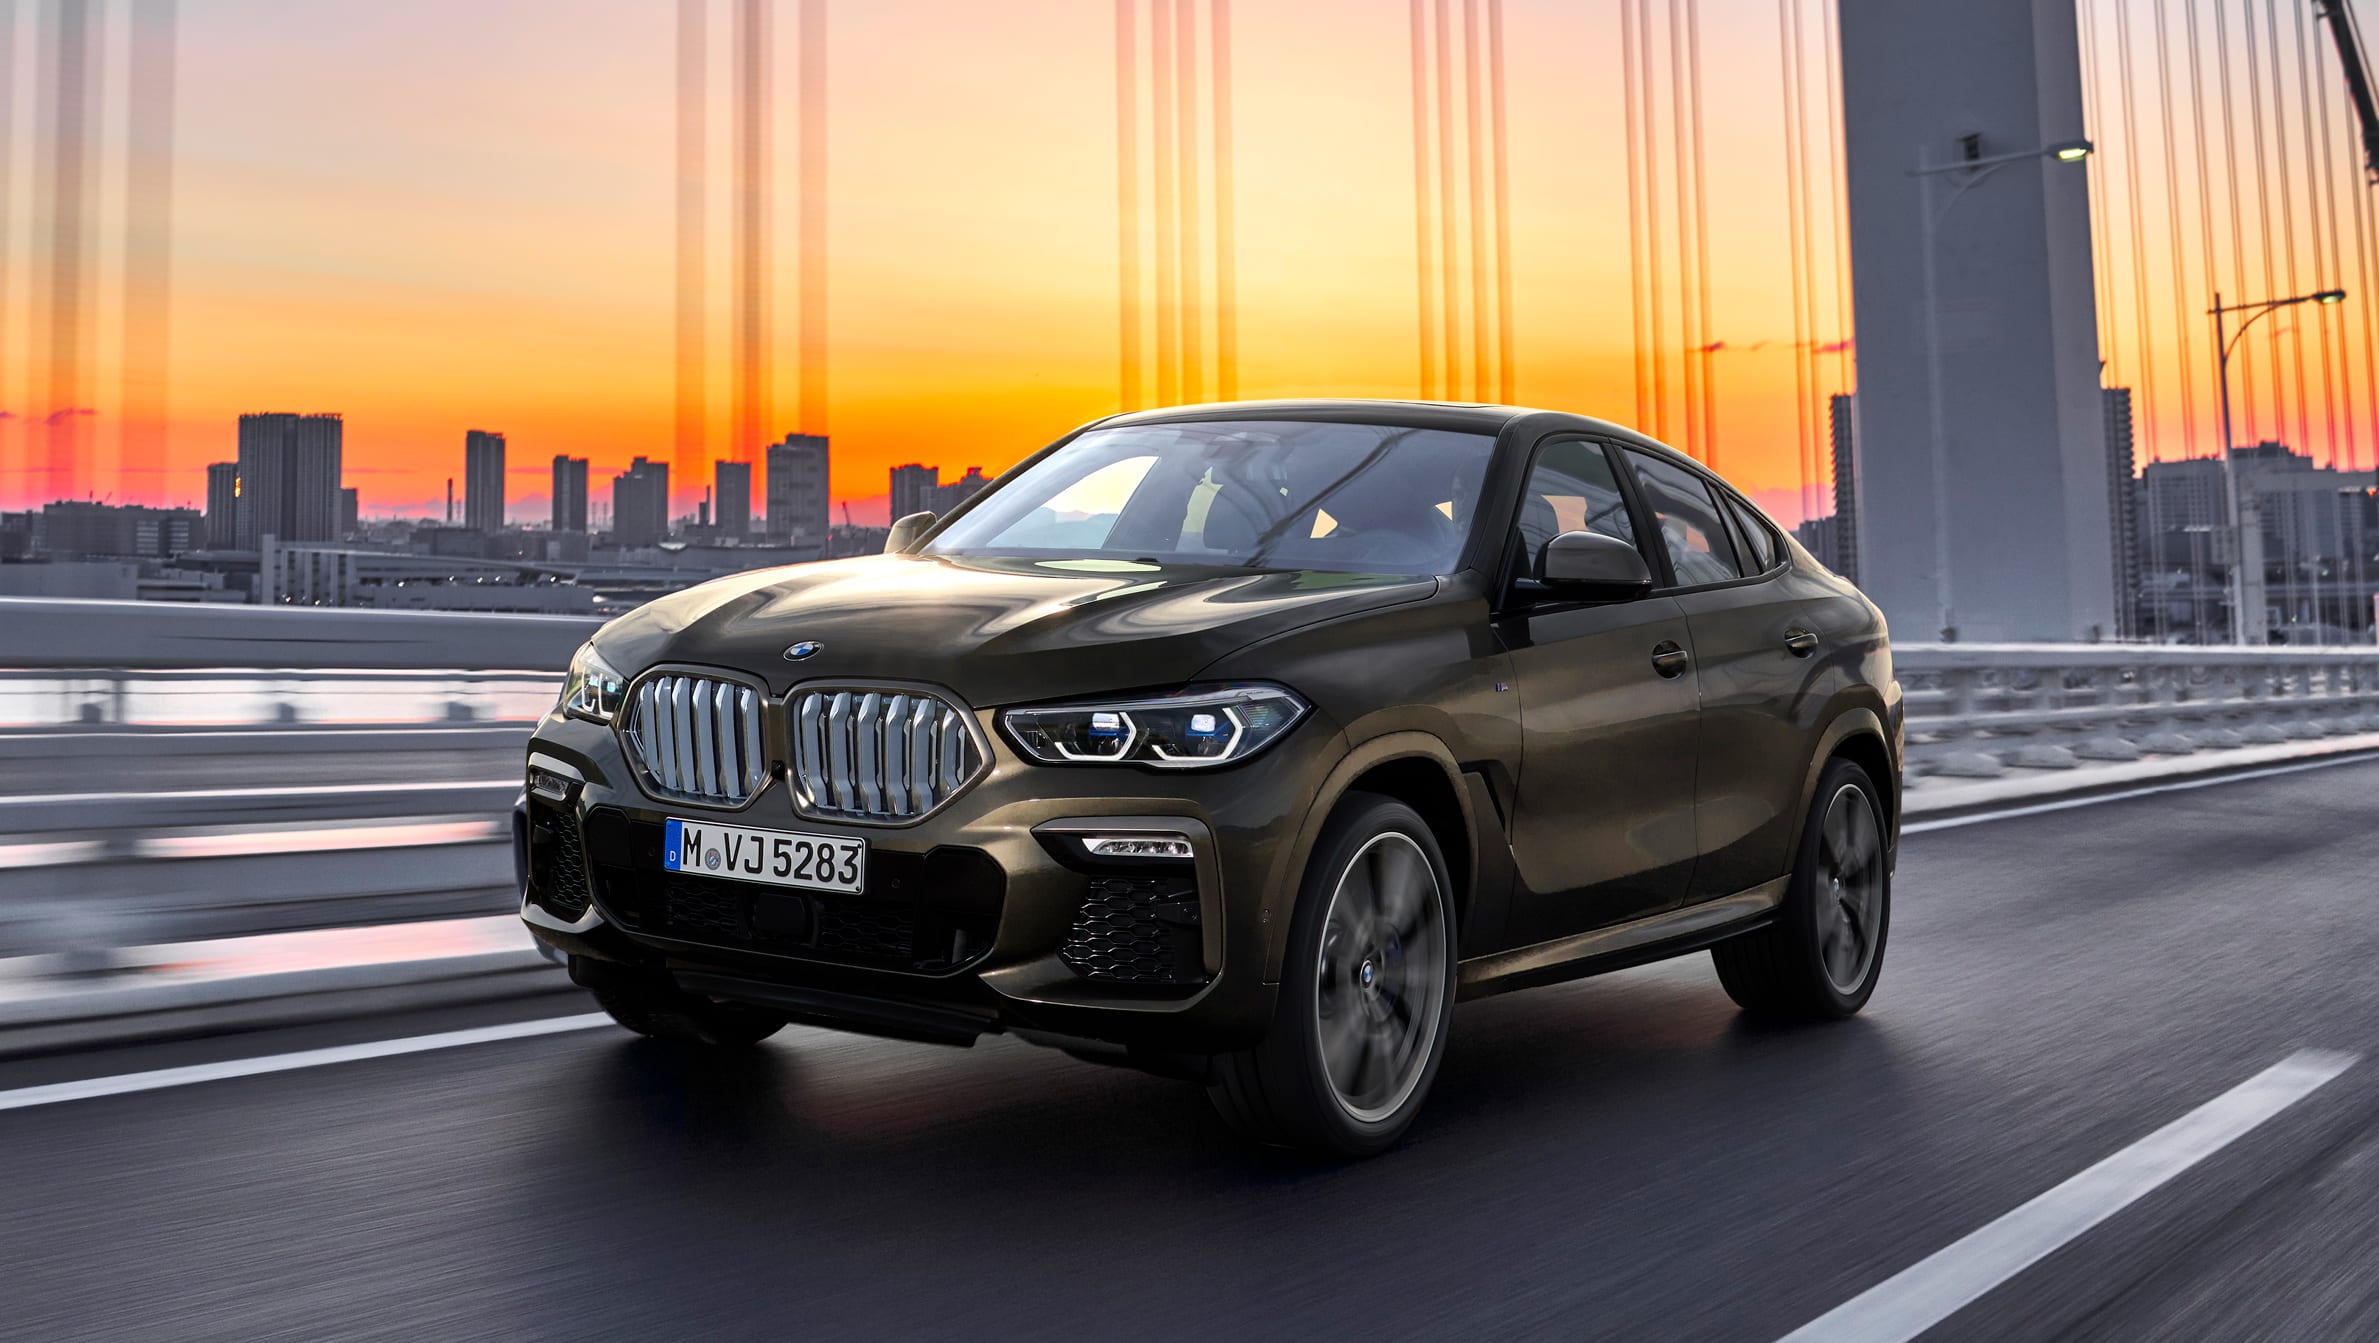 BMW X6 2020 revealed: Larger, more radical design, still very niche - Car  News